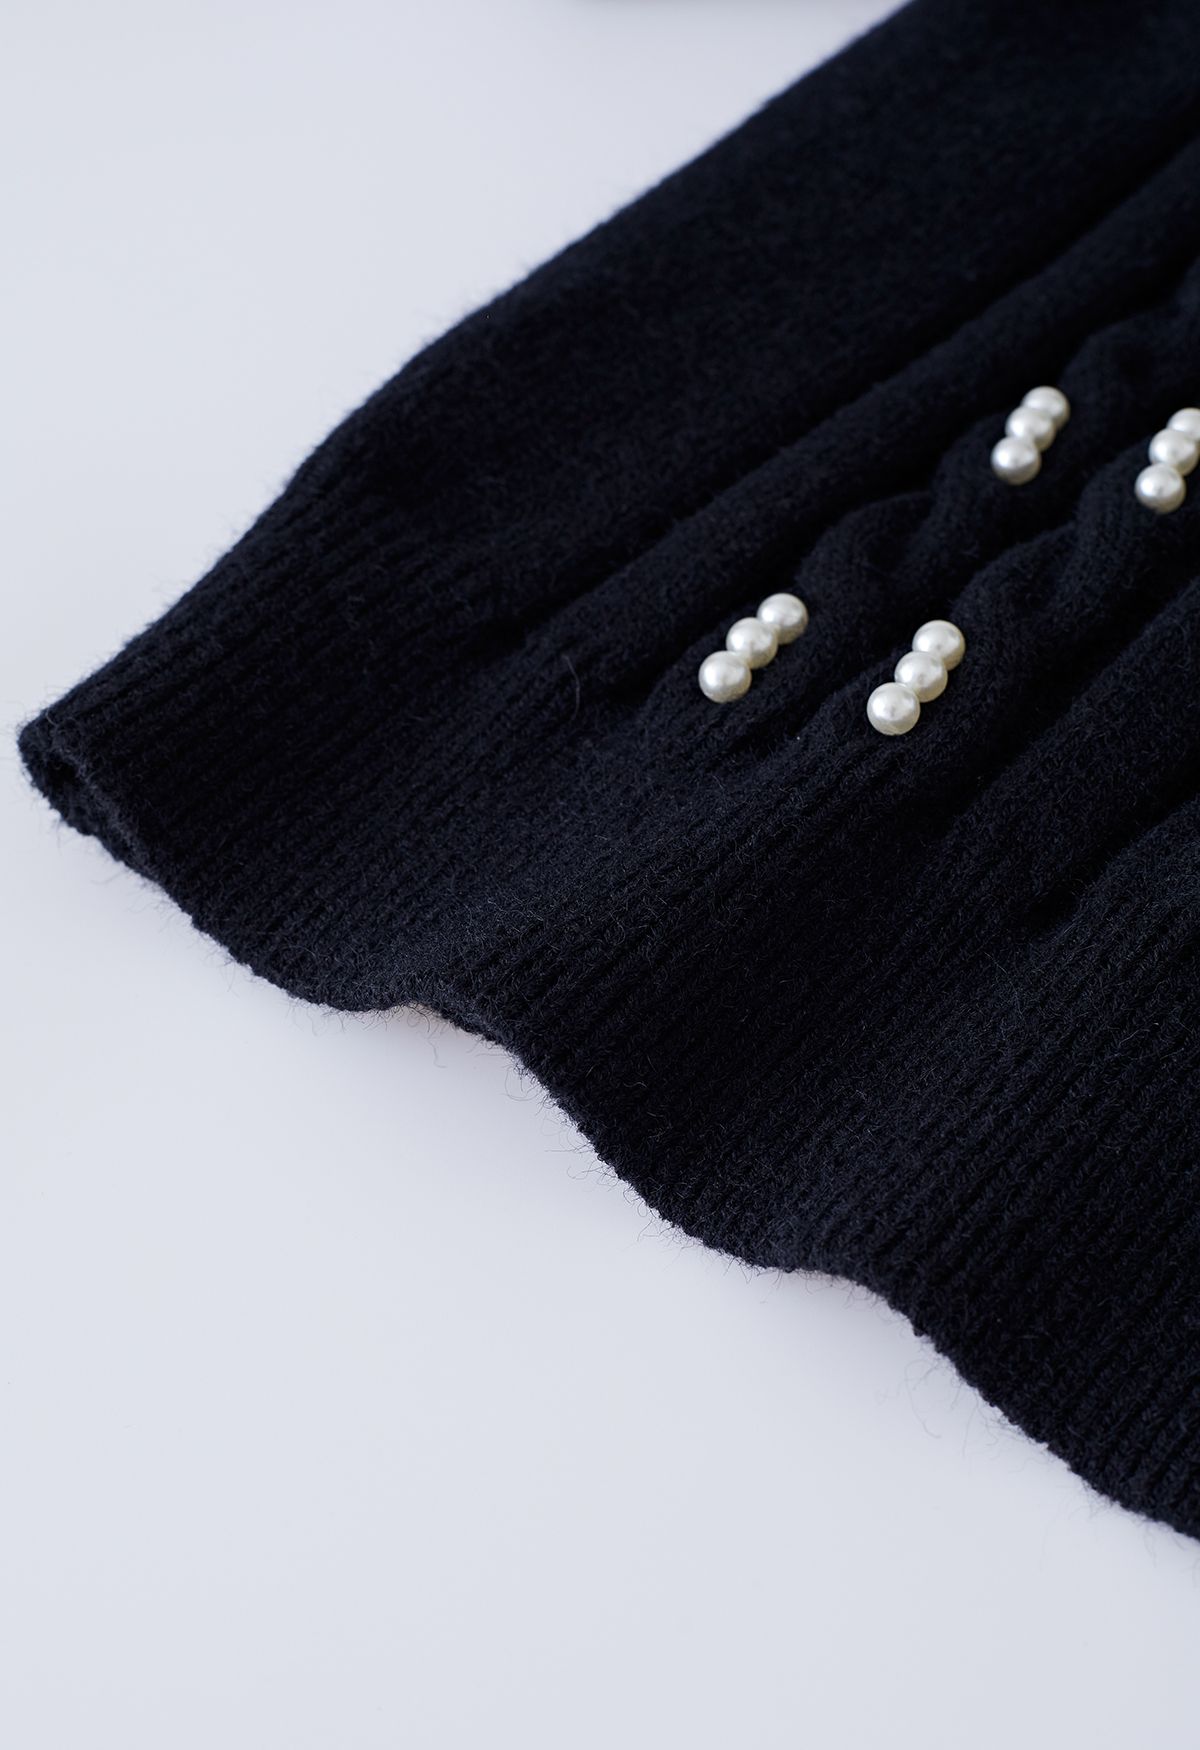 Pearl Embellished Braid Knit Top in Black